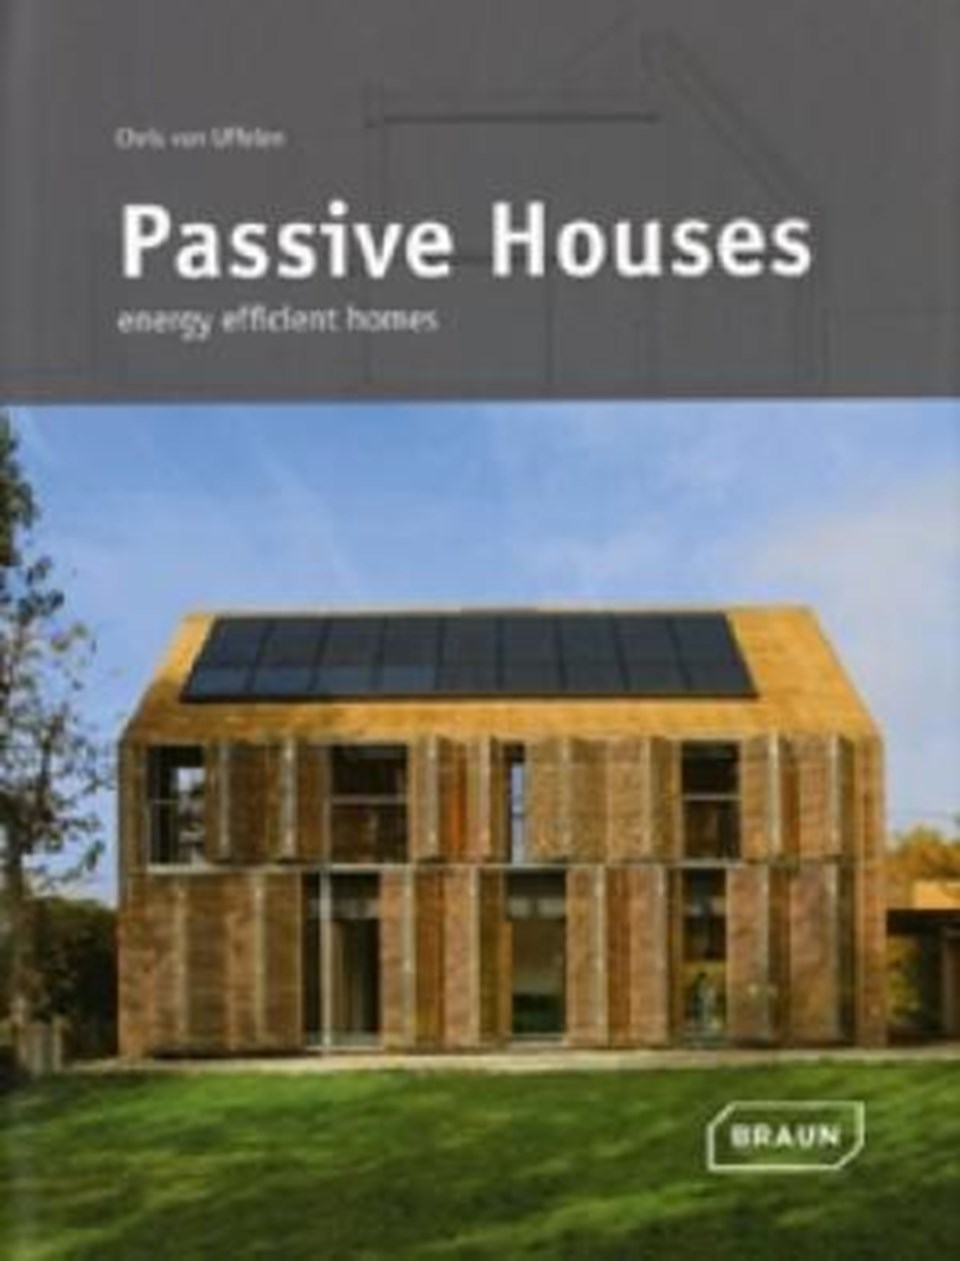 Passive Houses - energy efficient homes